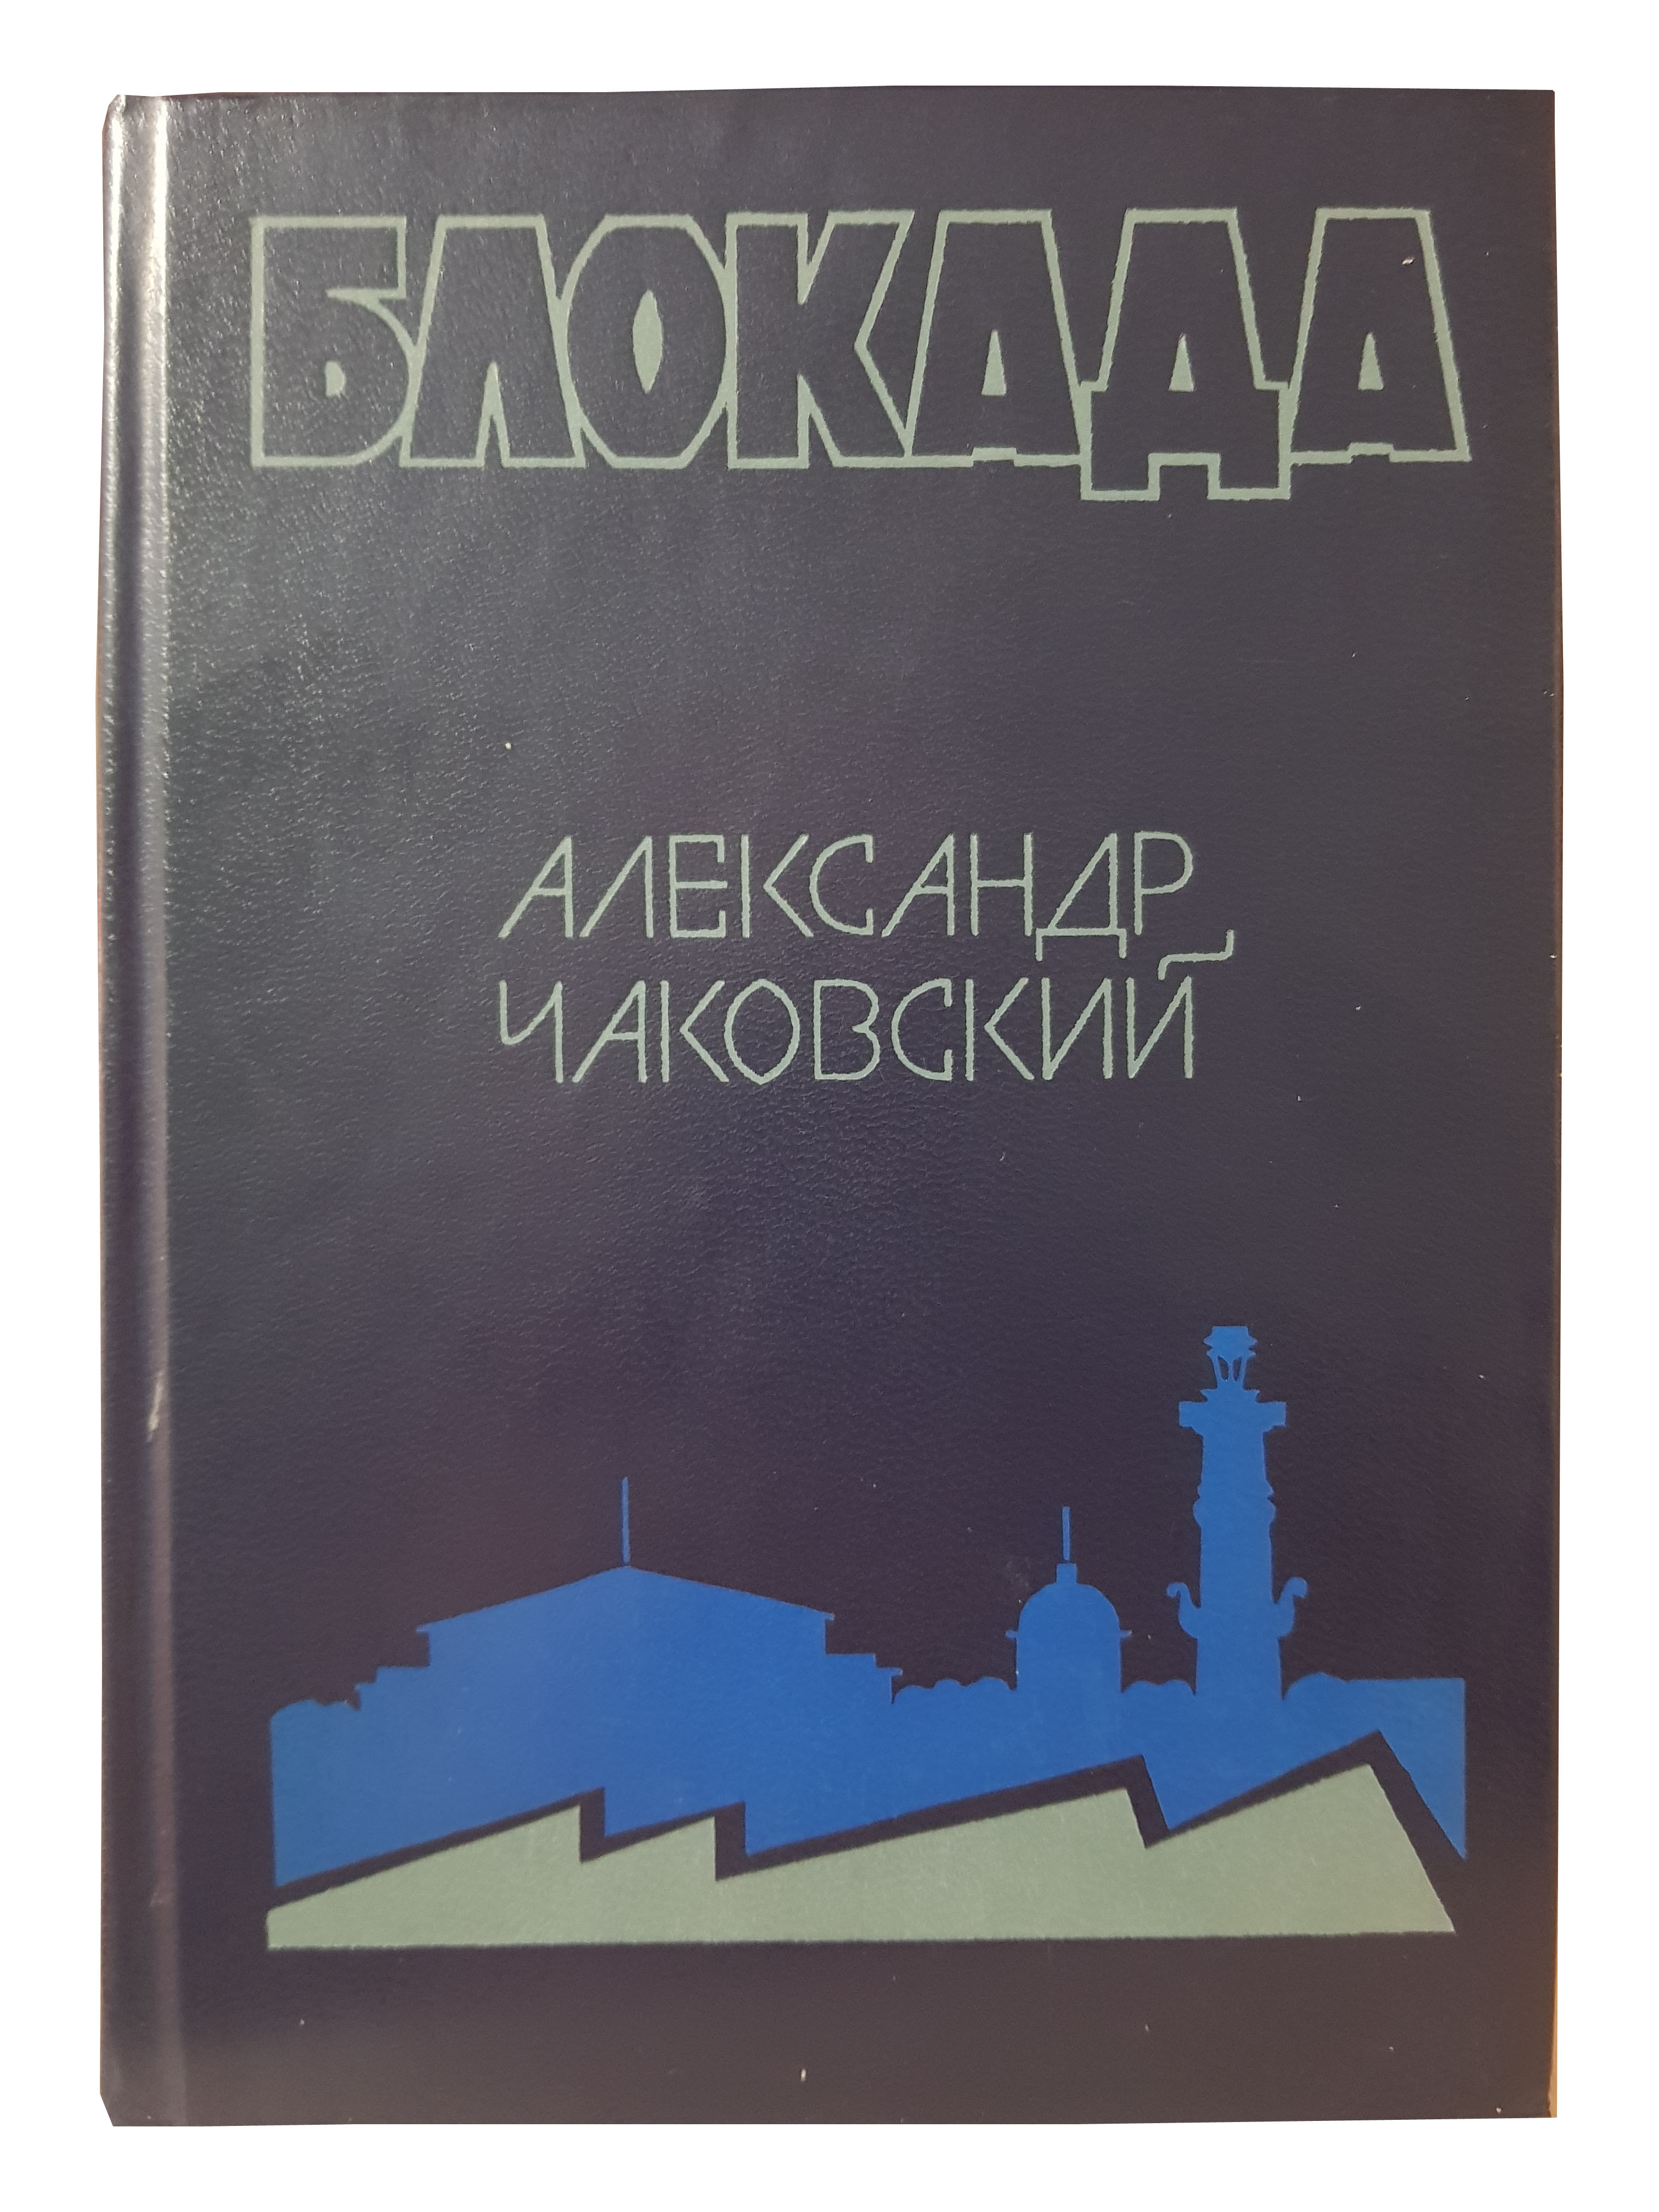 Чаковский А.Б. (Блокада. Книга 3 и 4).jpg